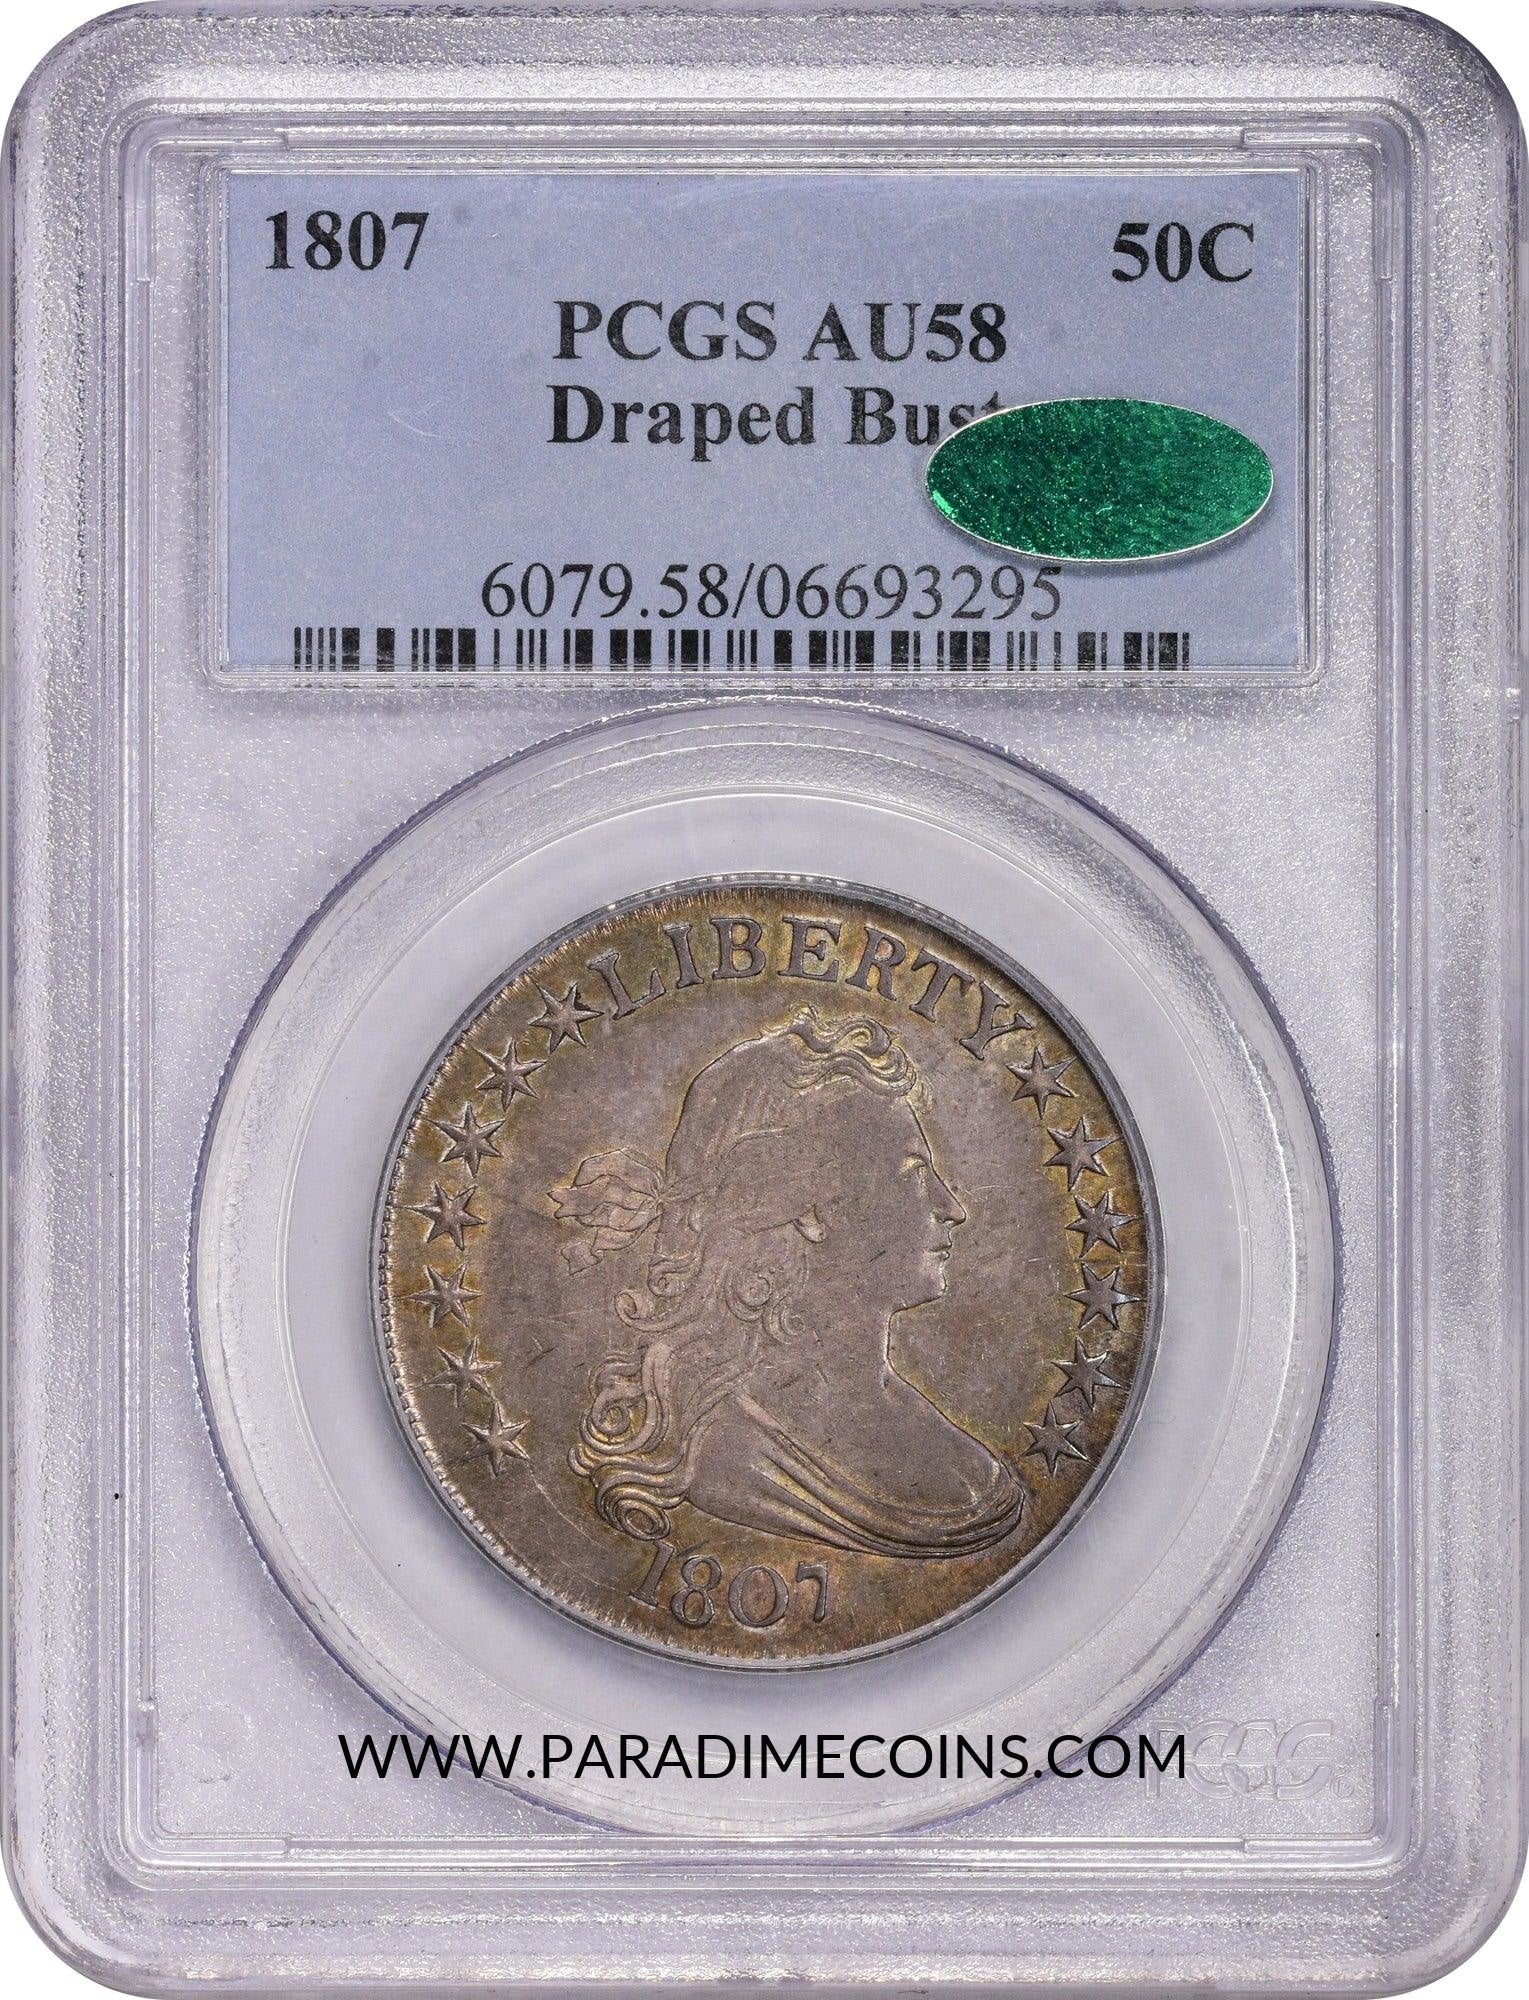 1807 50C DRAPED BUST AU58 PCGS CAC - Paradime Coins US Coins For Sale